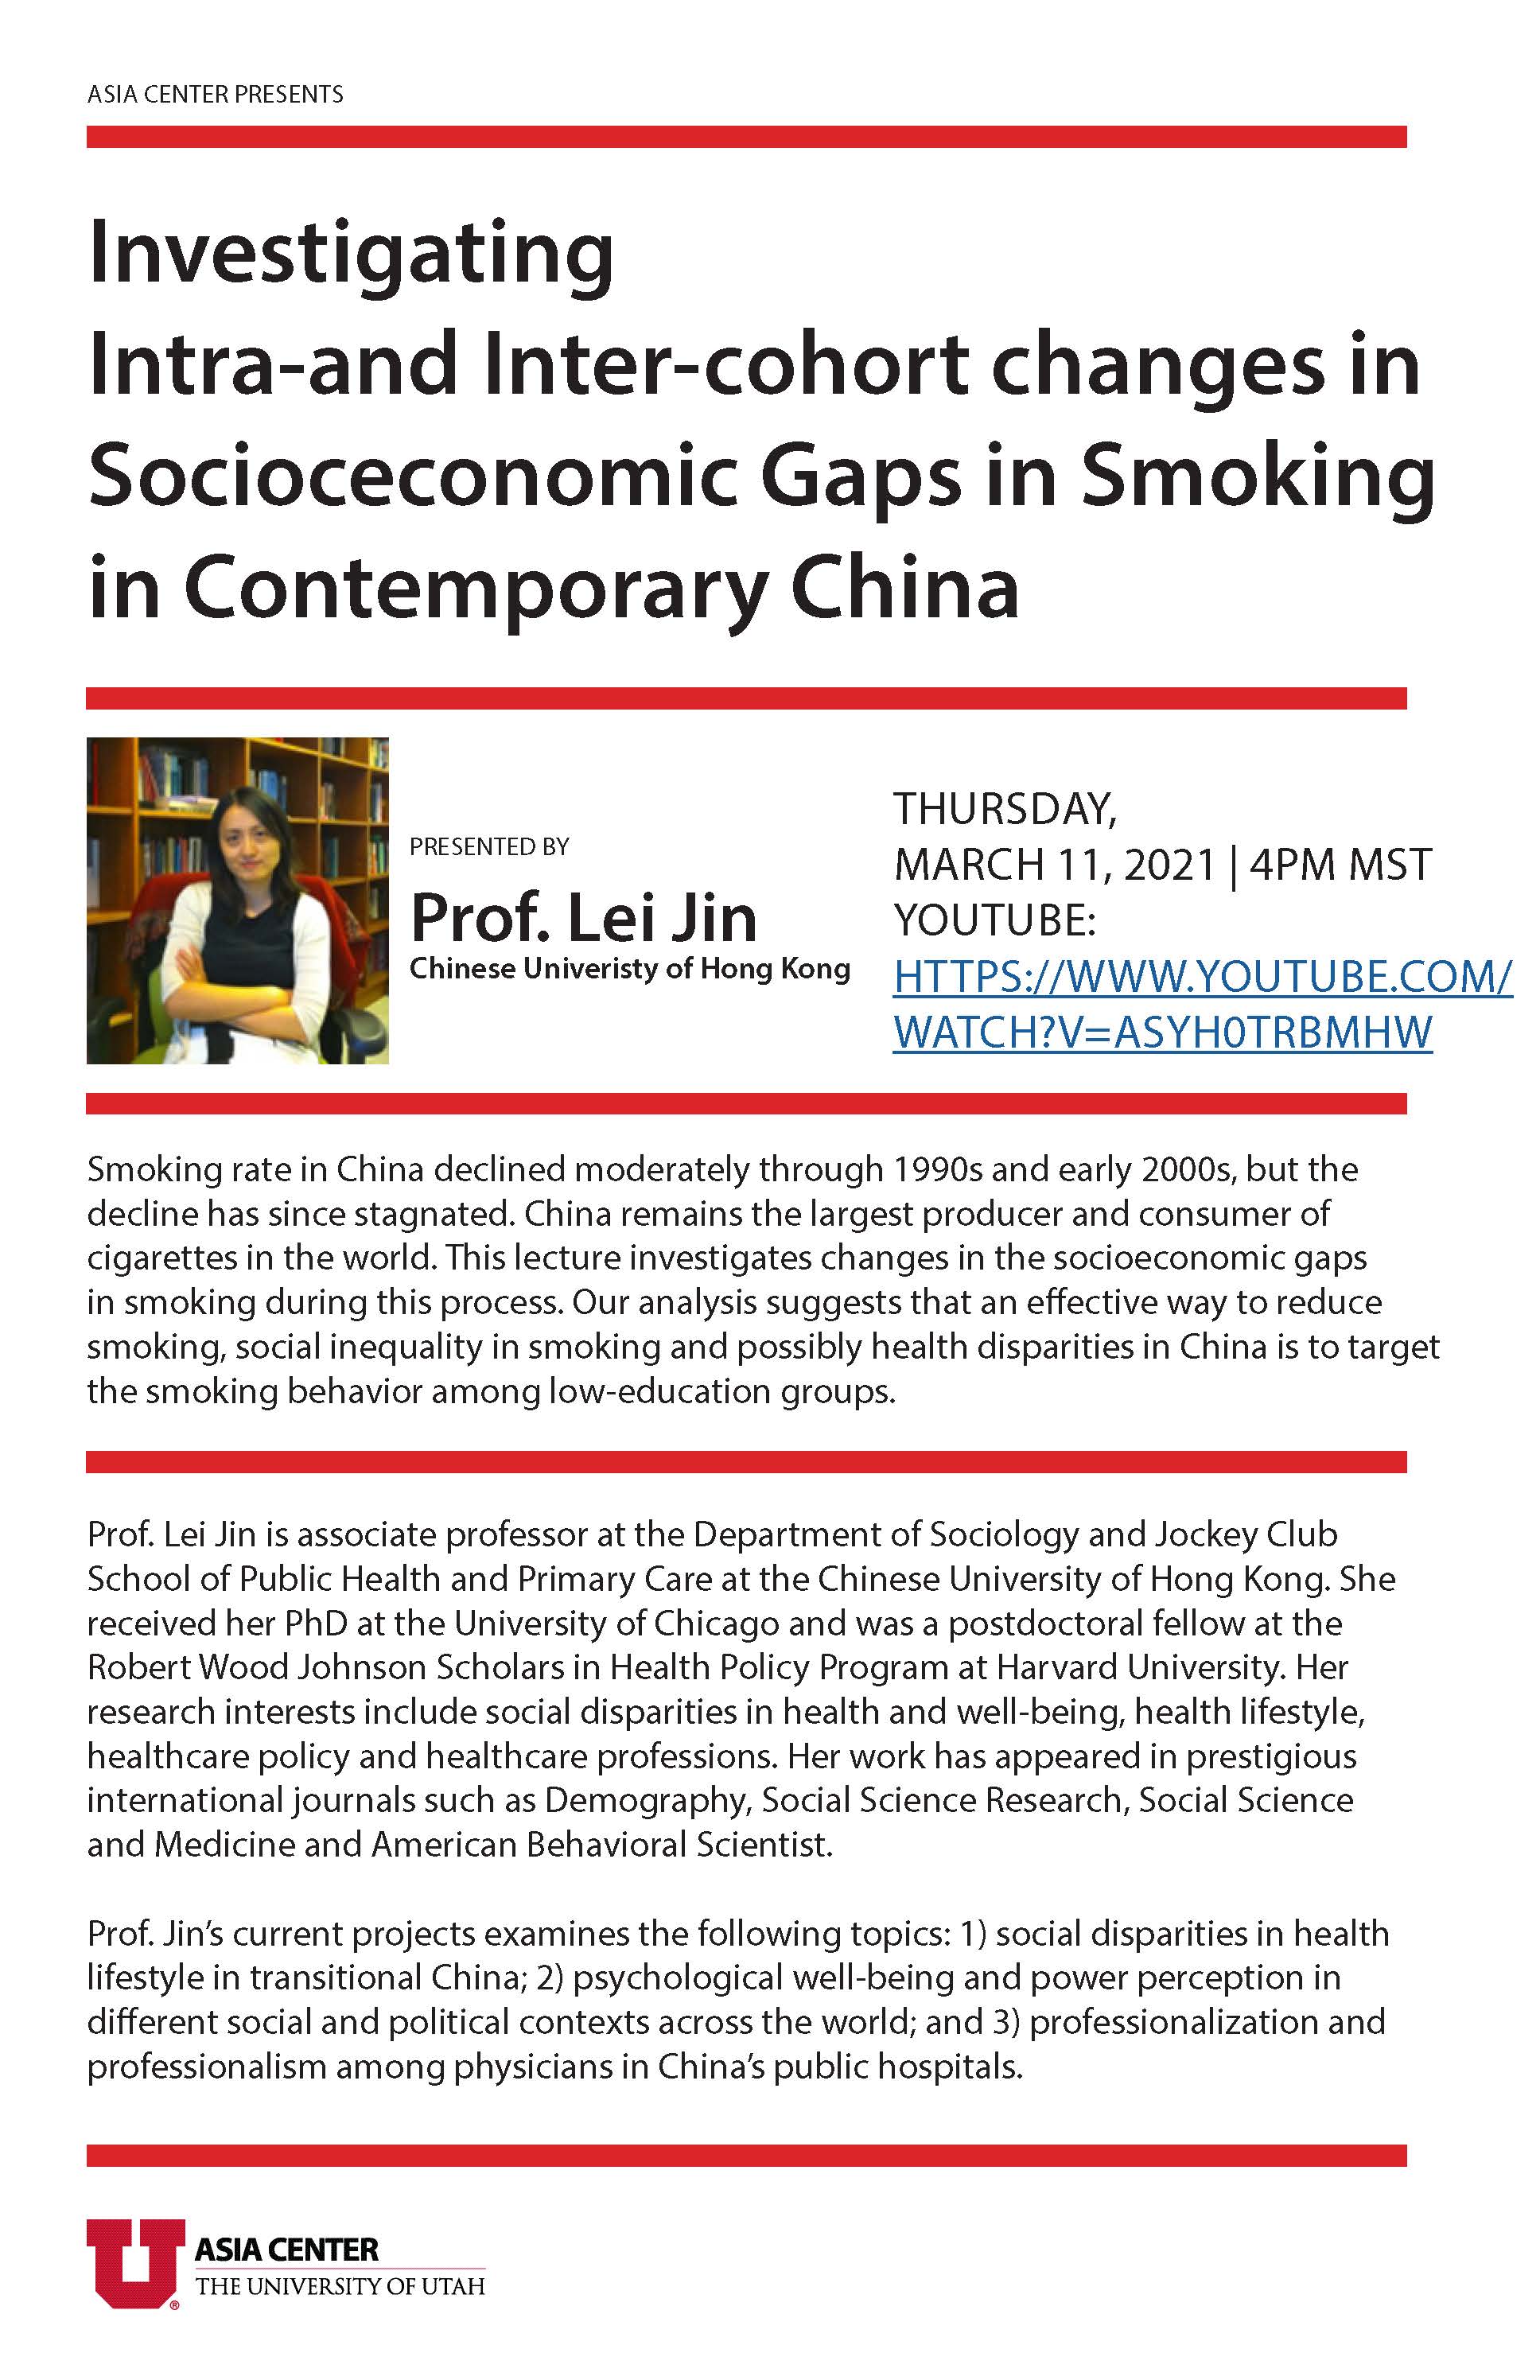 Socioeconomic Gaps in Smoking - Prof. Lei Jin Flyer